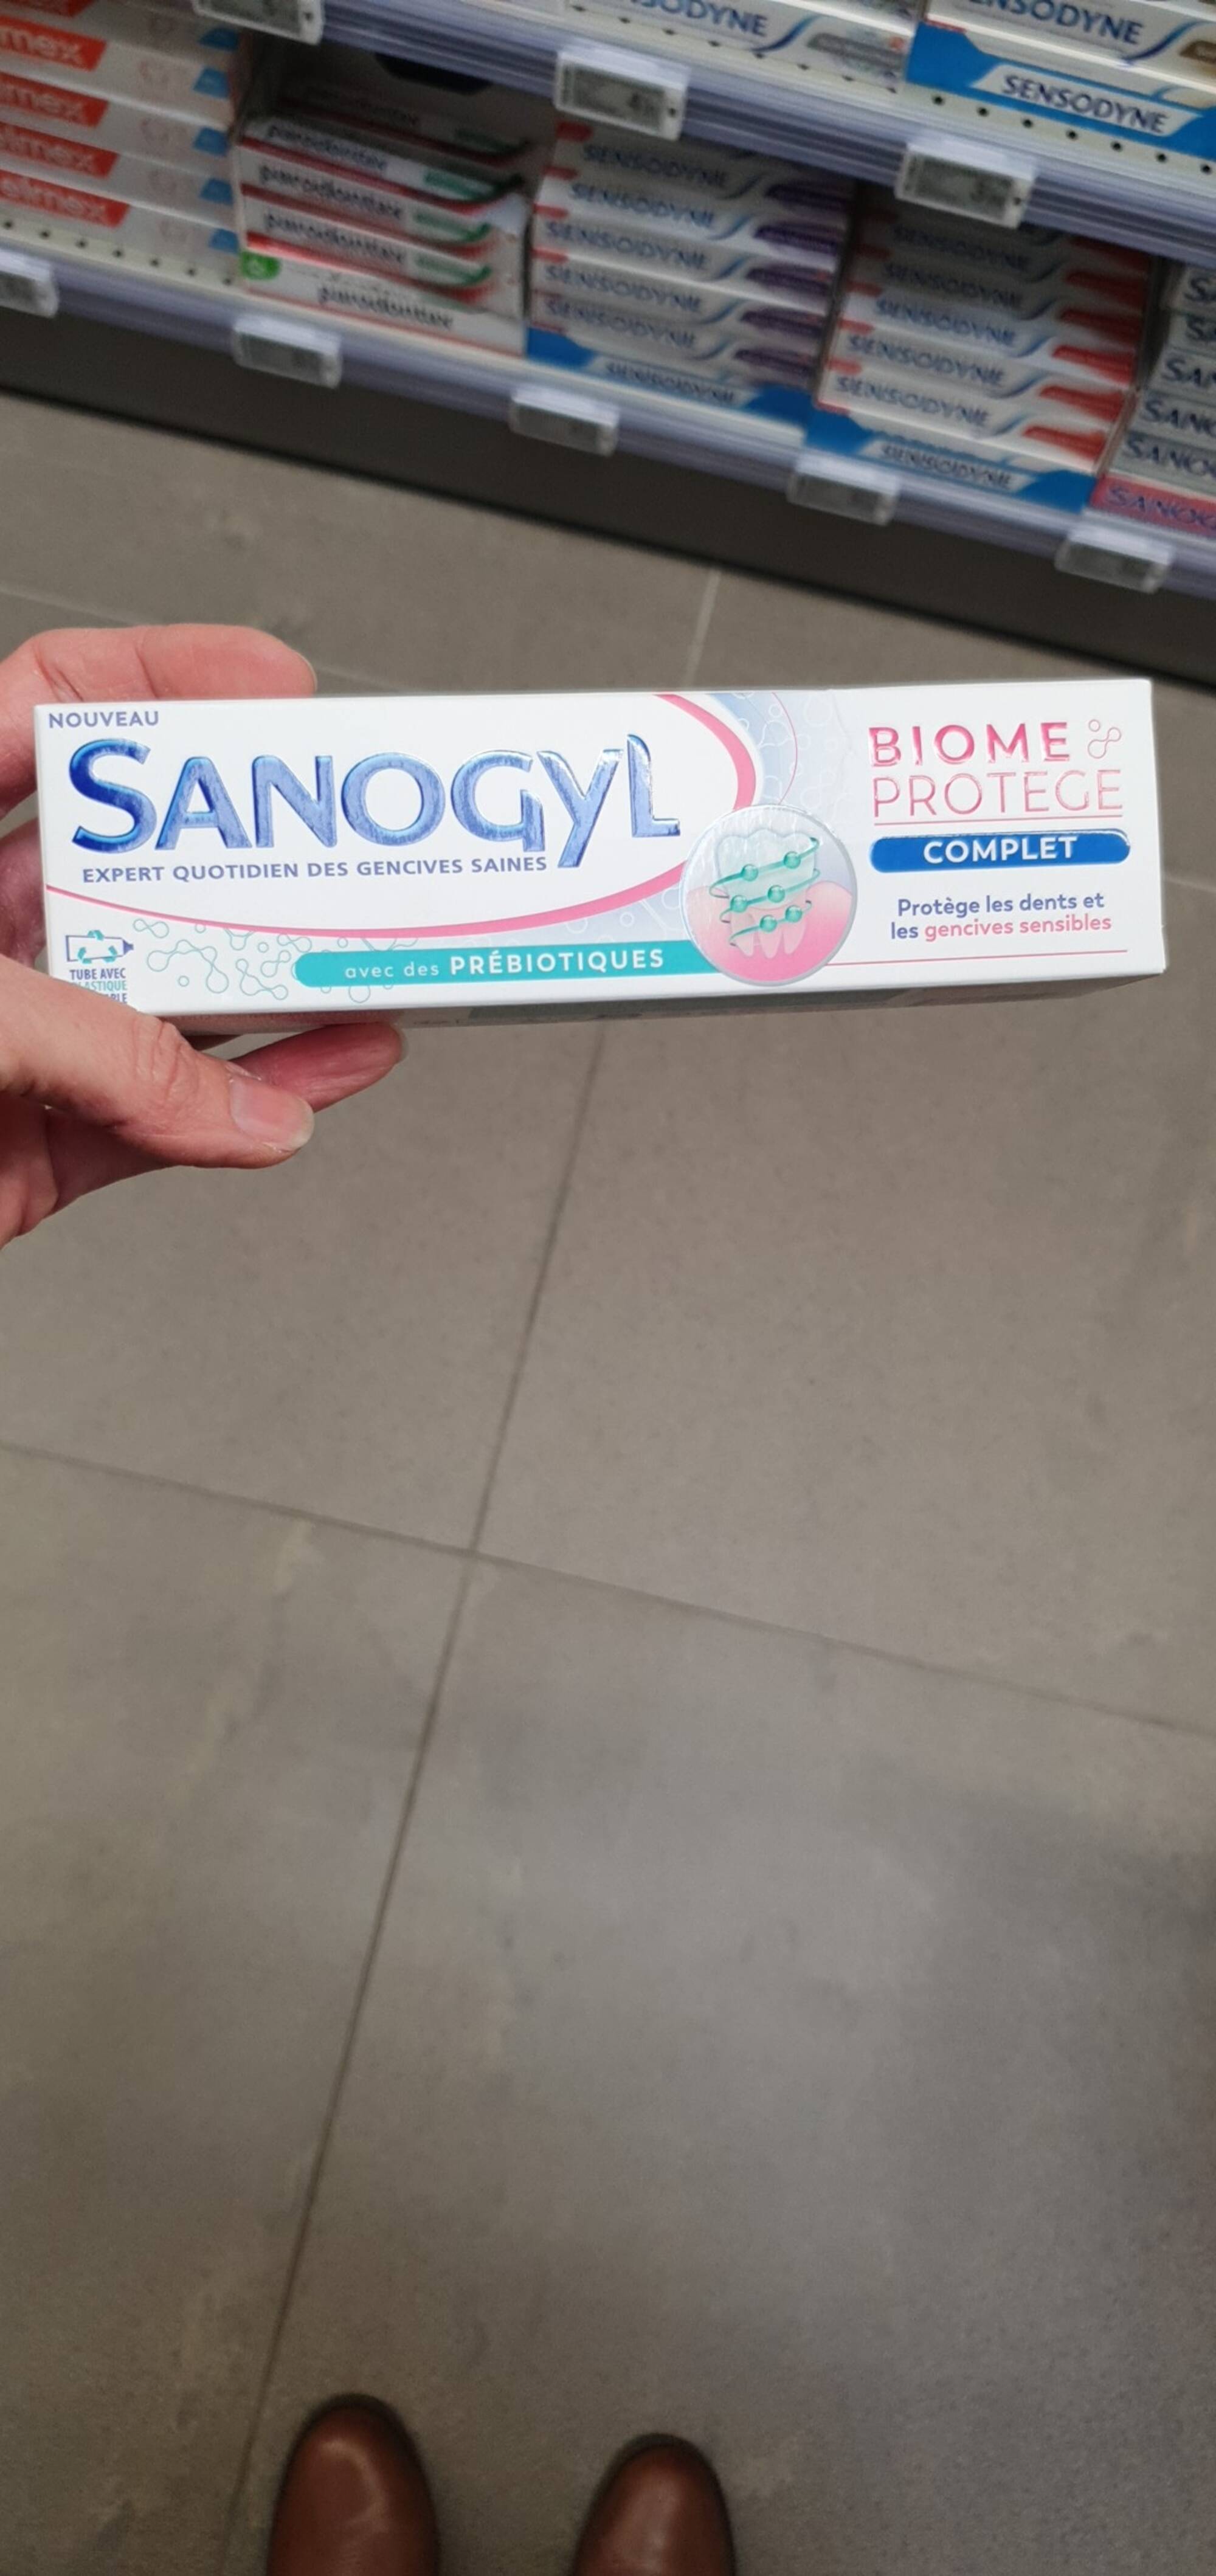 SANOGYL - Biome protège - Dentifrice